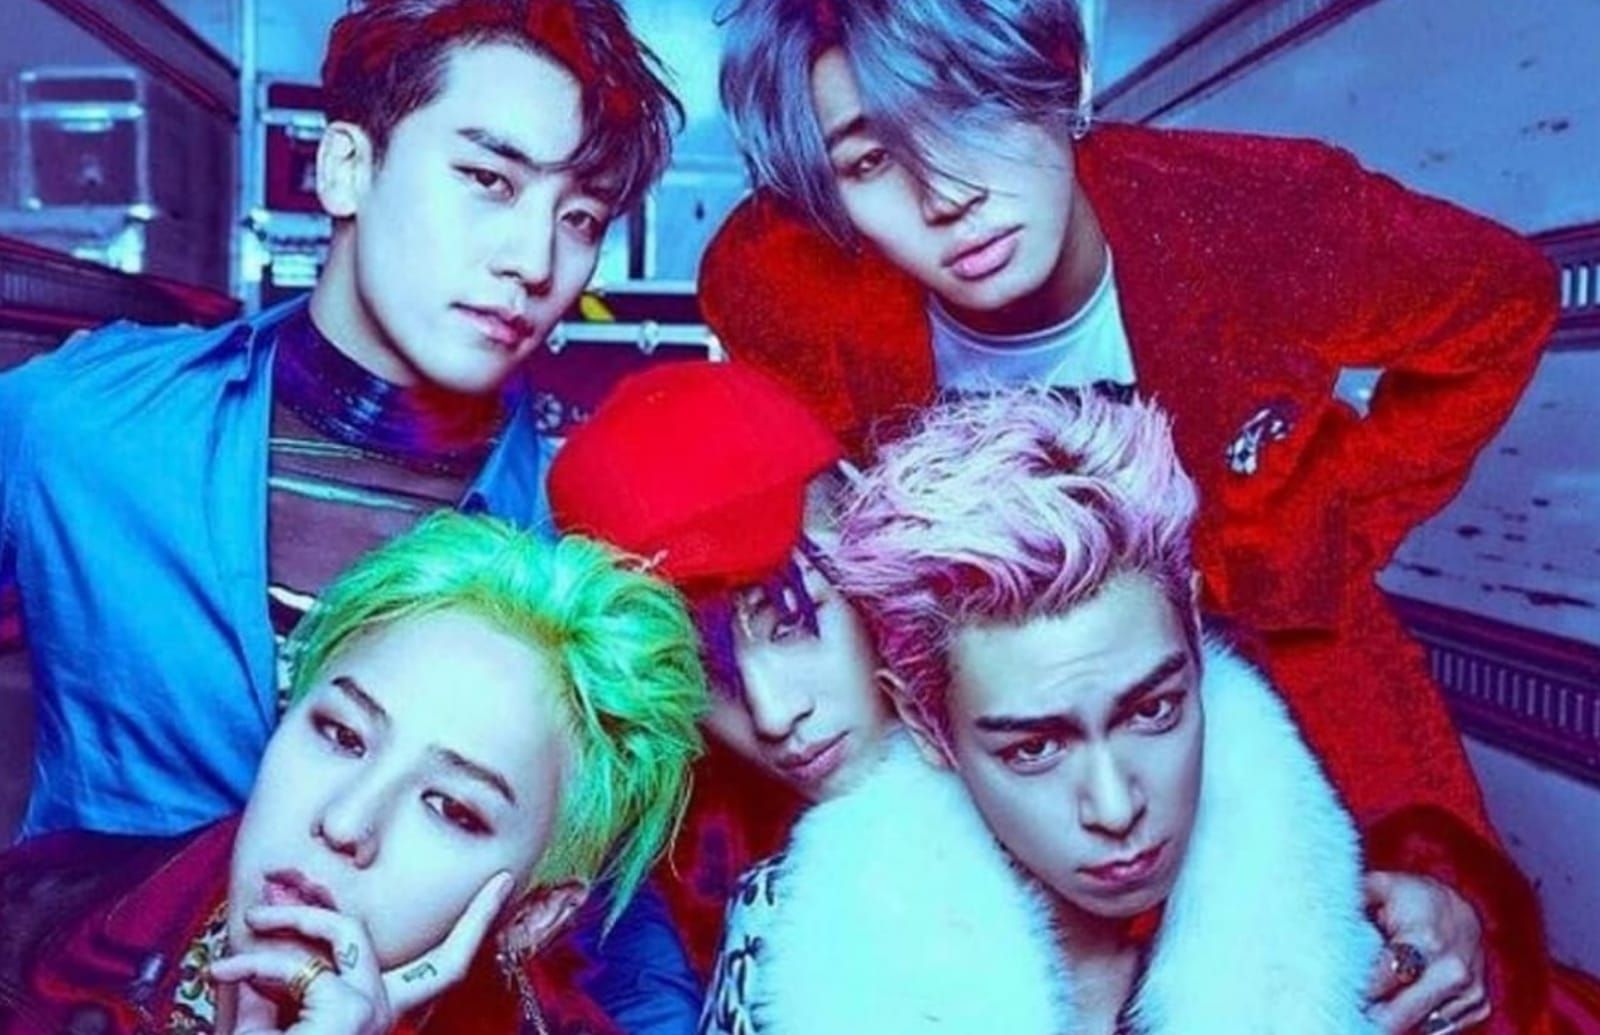 Akhirnya BIGBANG Comaback Lewat Lagu “Still Life”